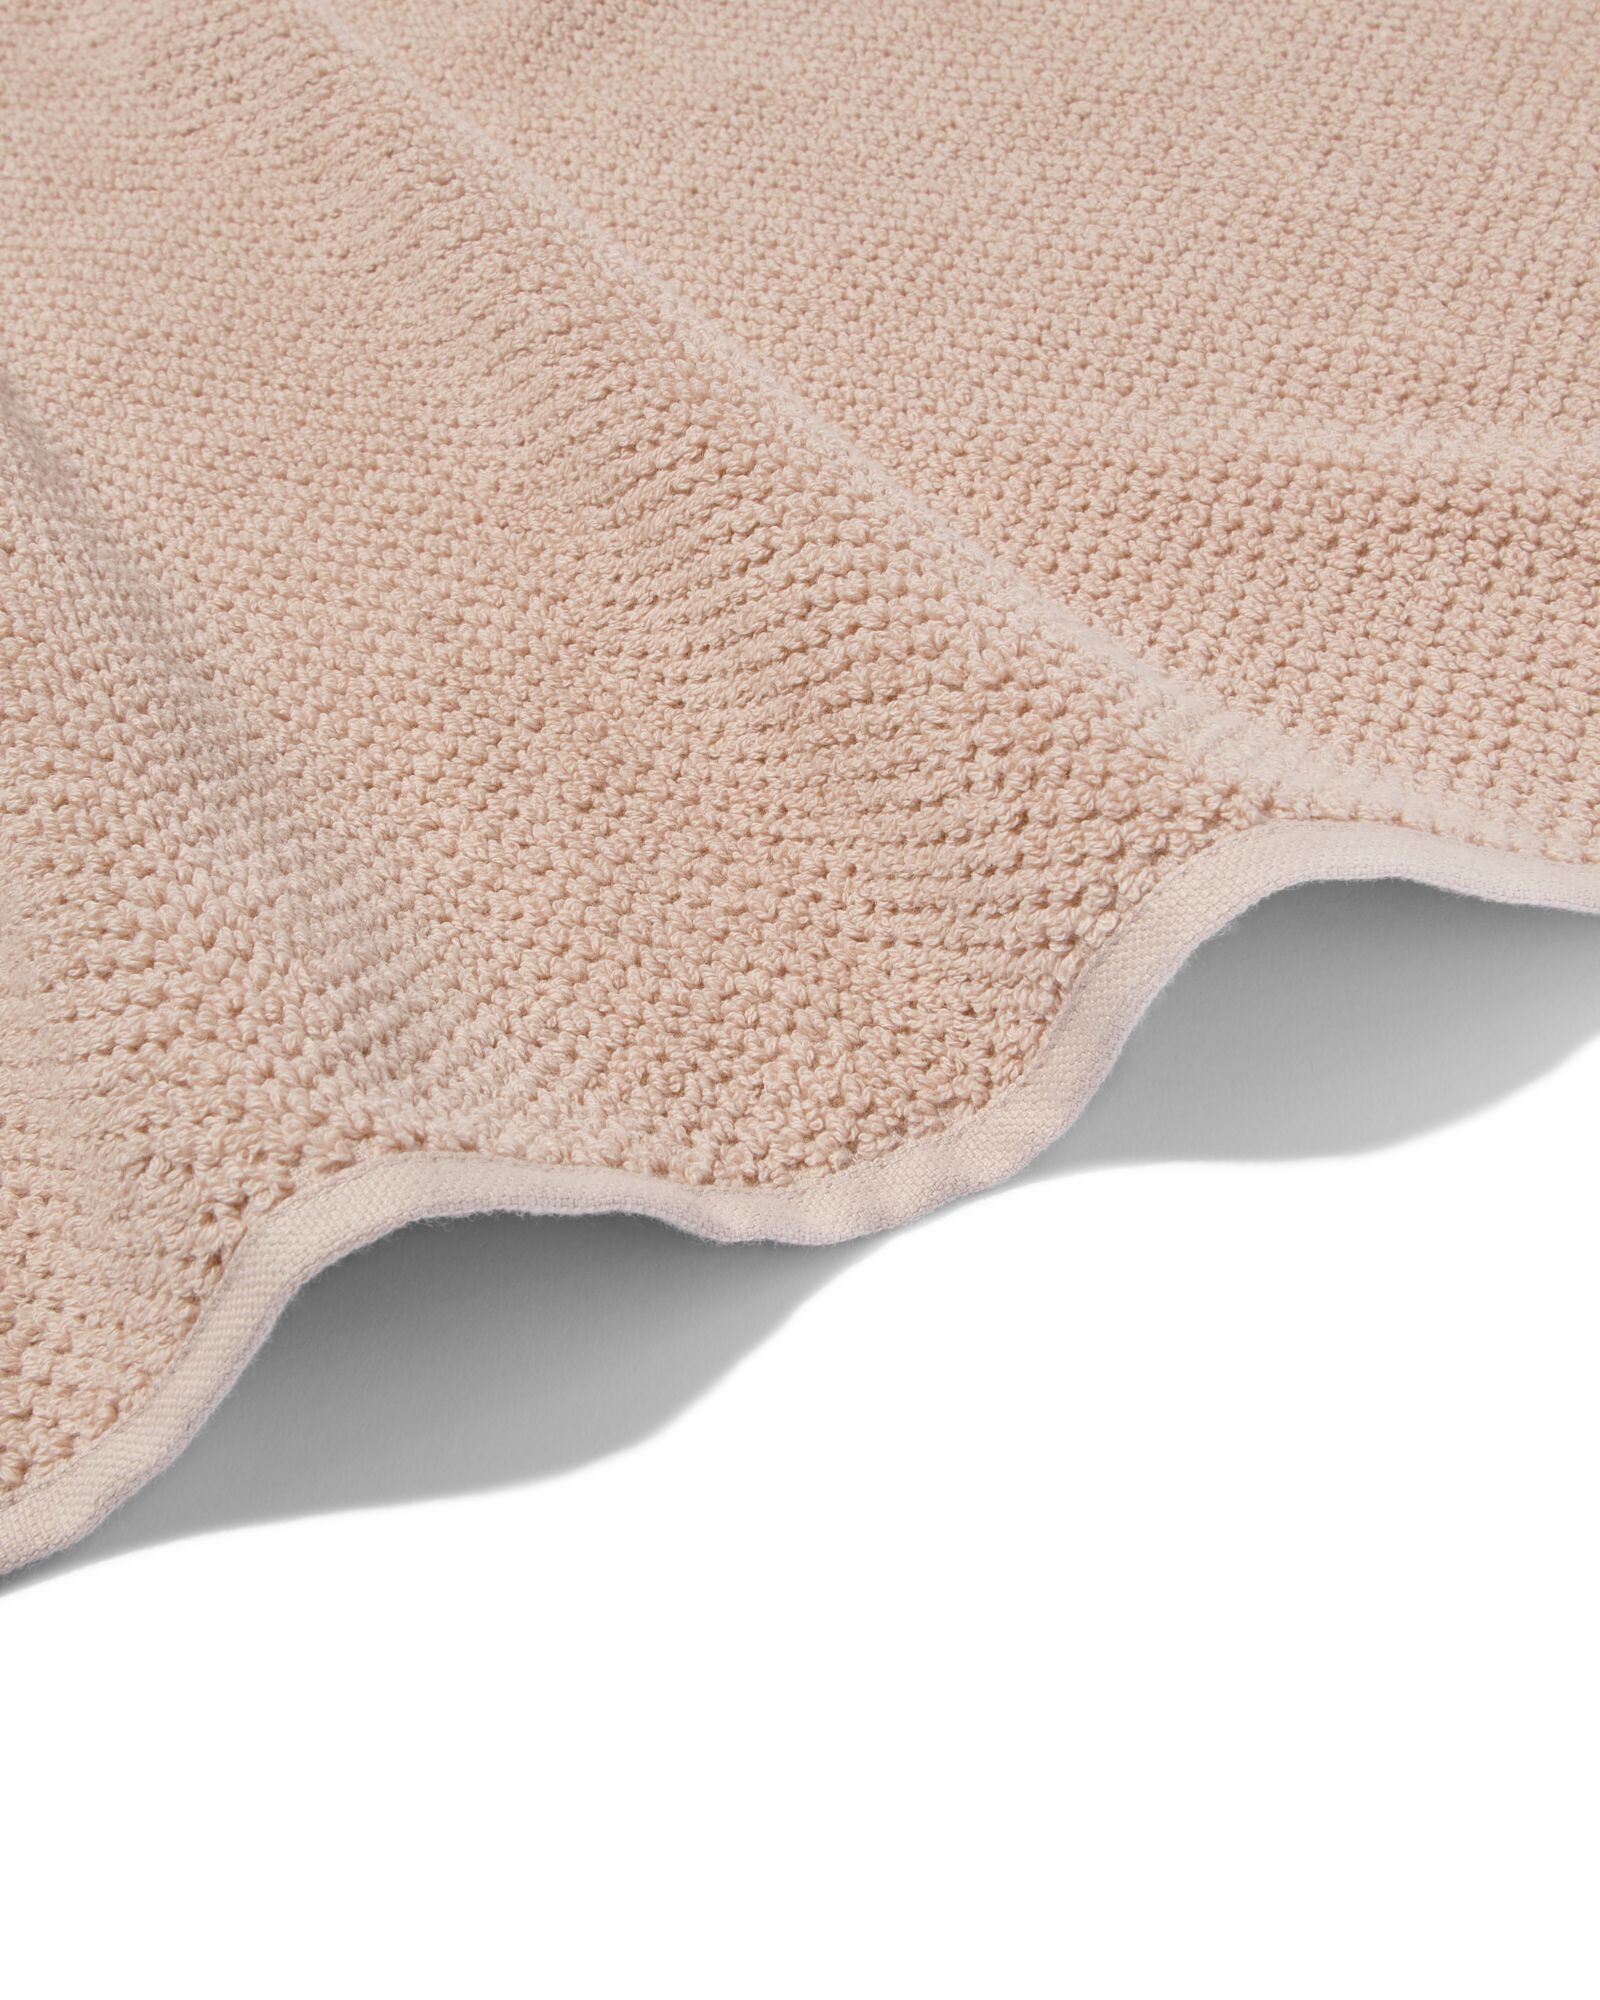 handdoek zware kwaliteit - rijstkorrel beige zand zand - 1000032601 - HEMA